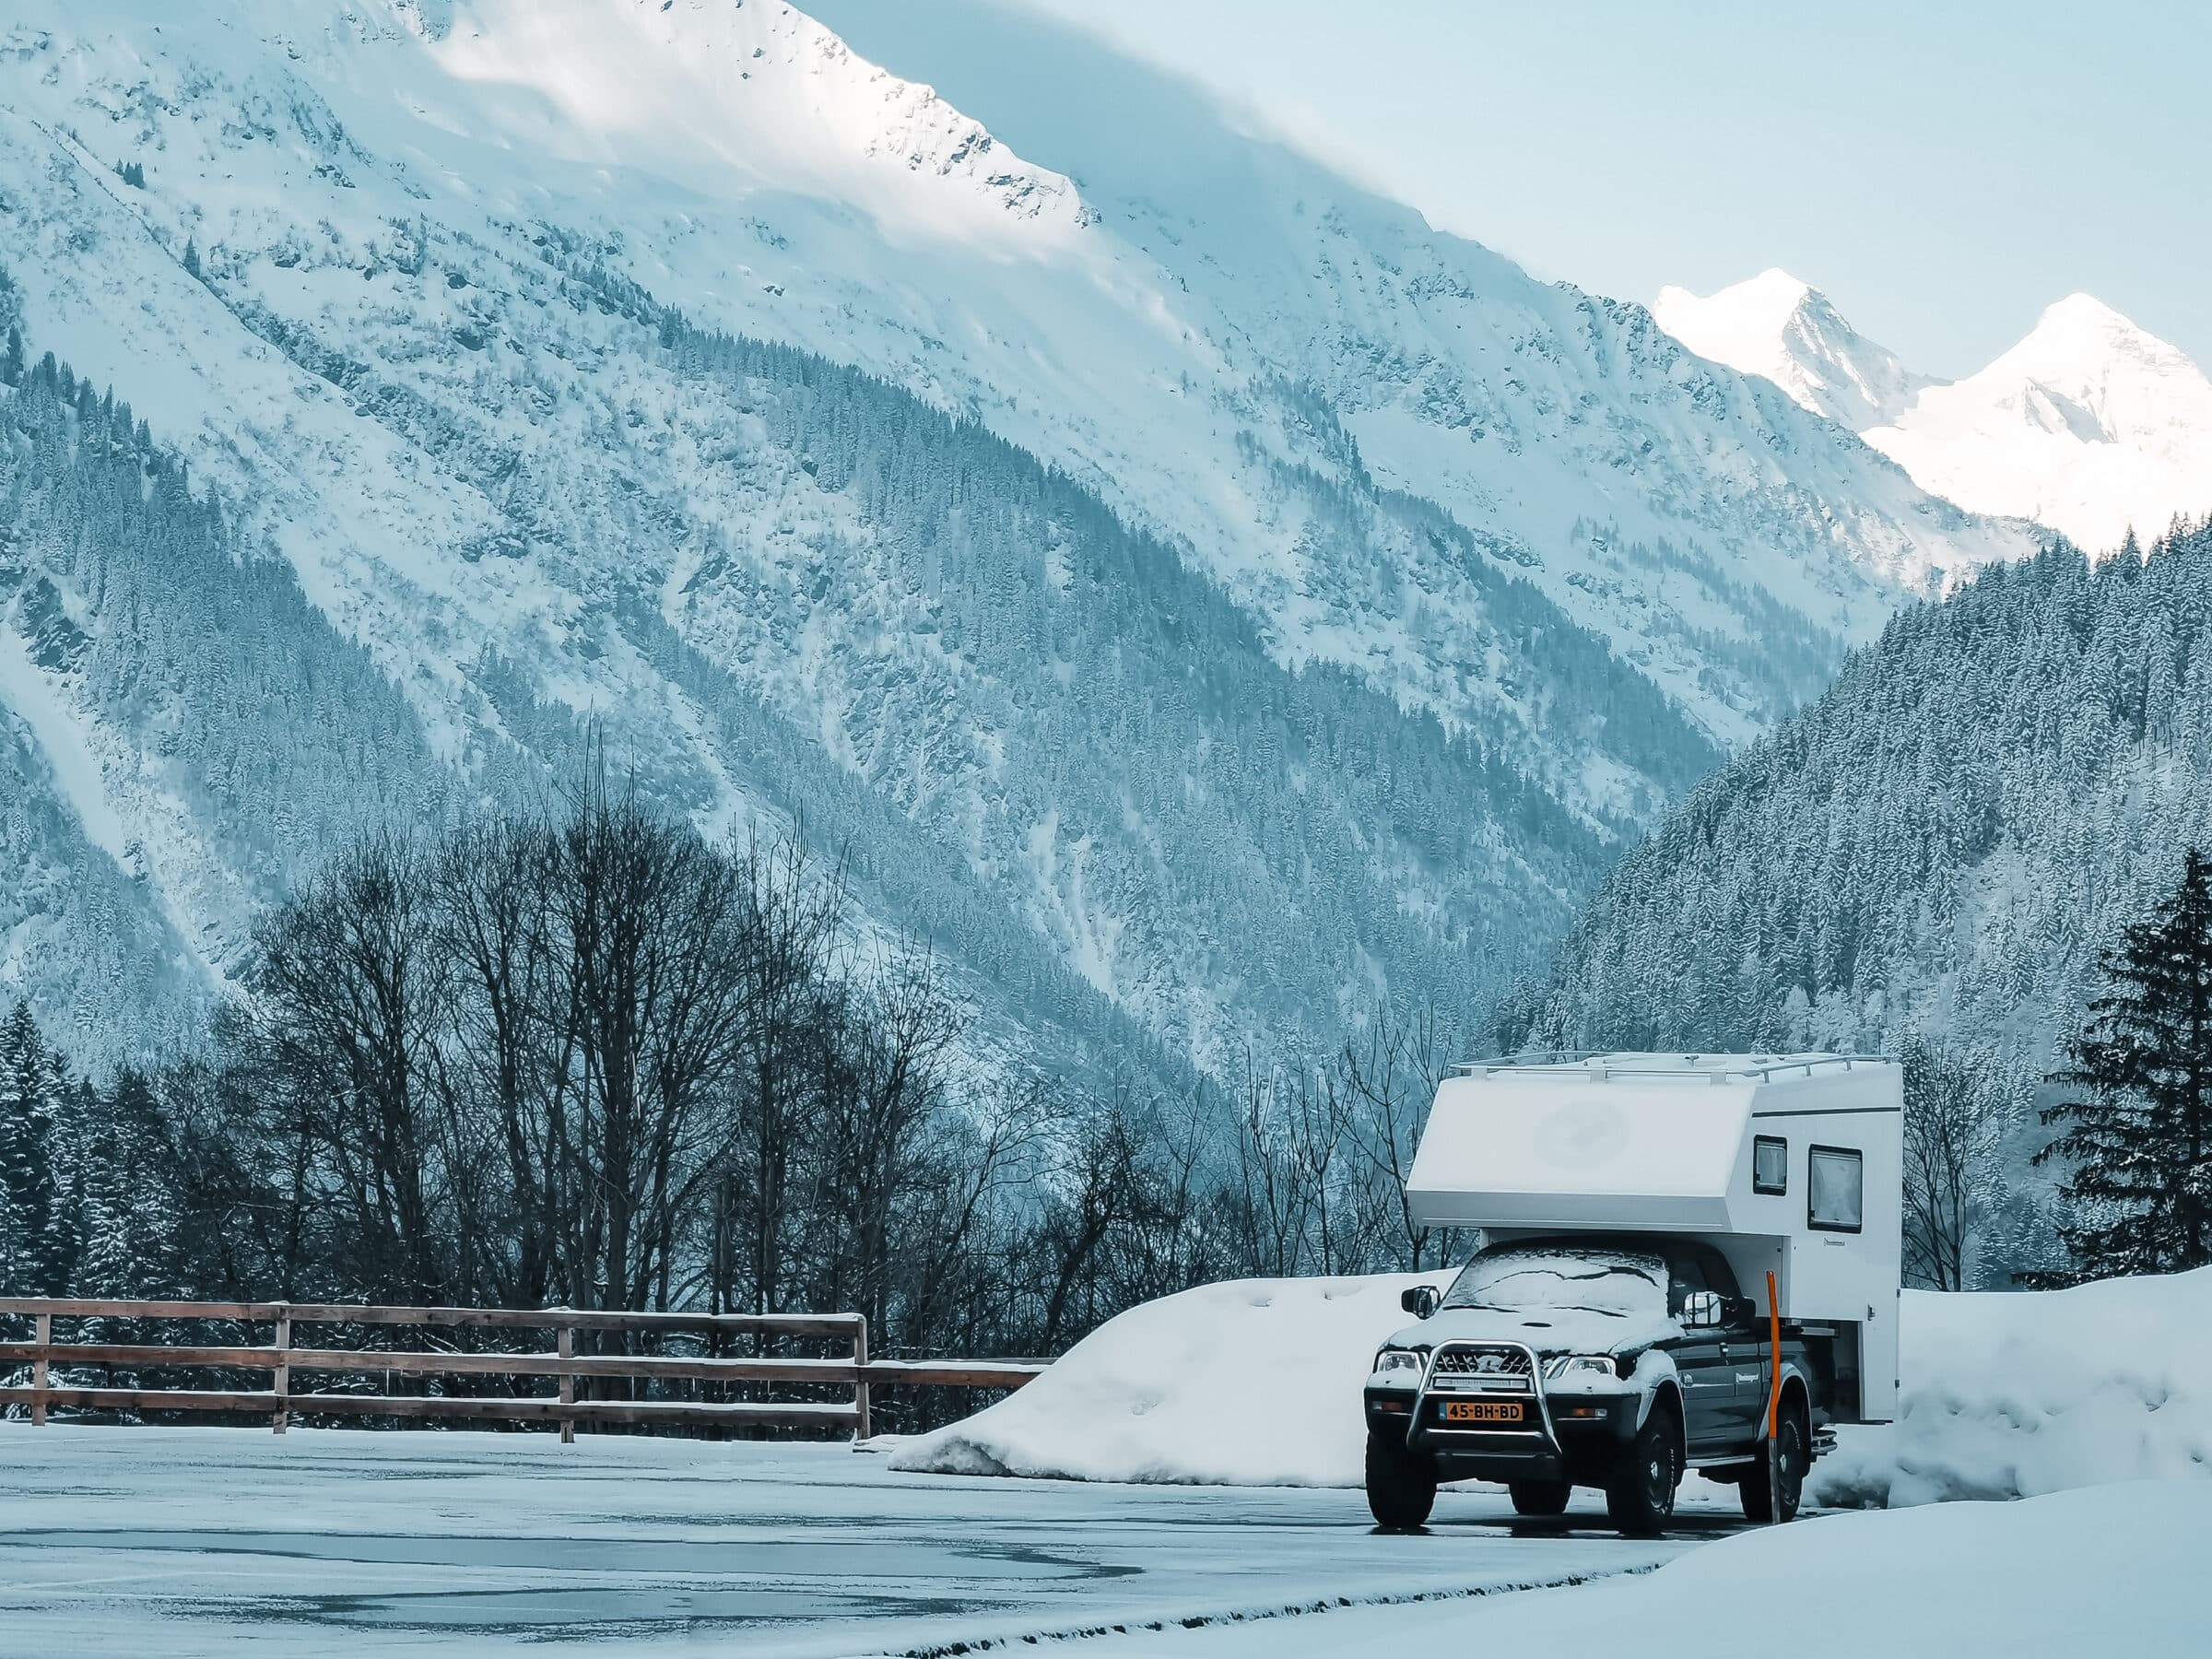 Skielike sneeuval | Roadtrip Berei Switserland voor